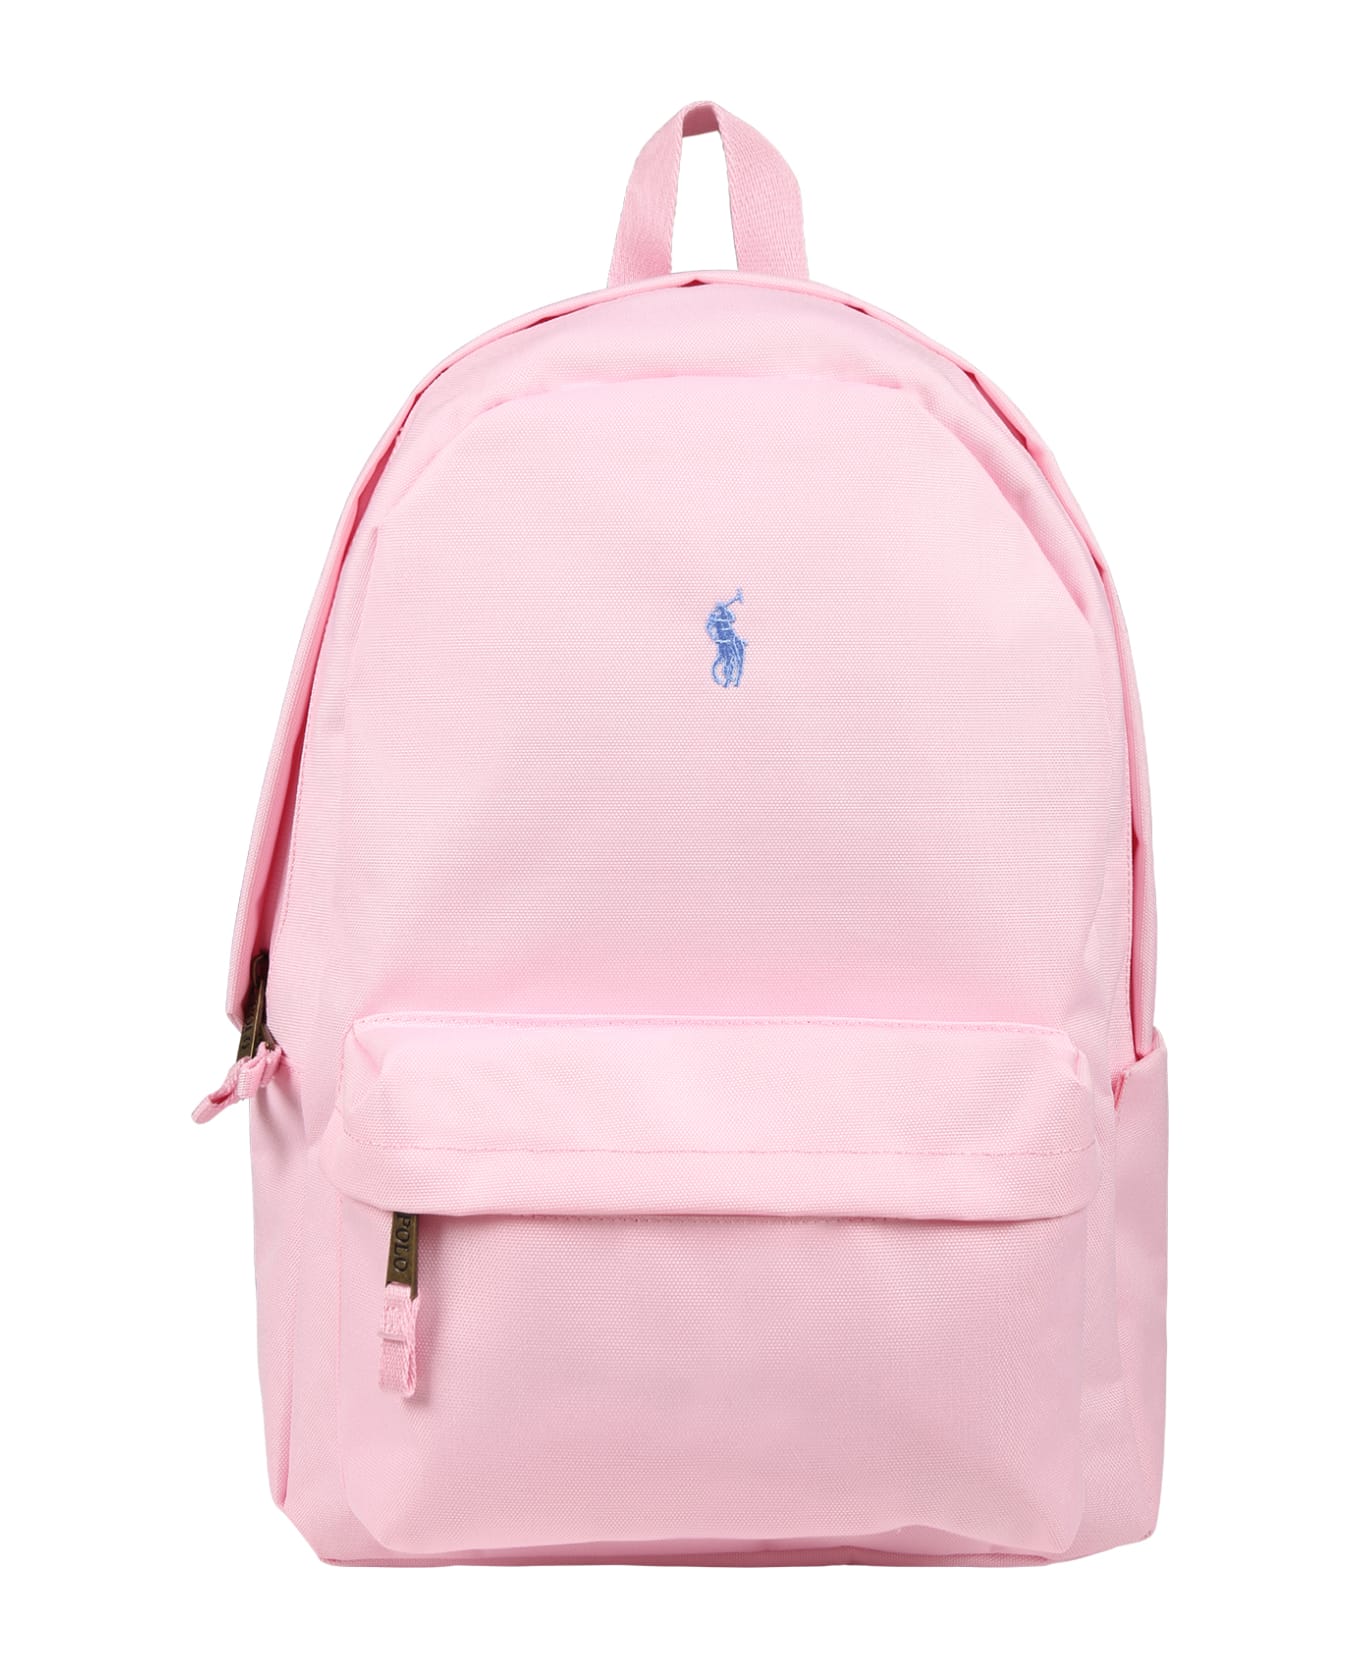 Ralph Lauren Pink Backpack For Kids - Pink